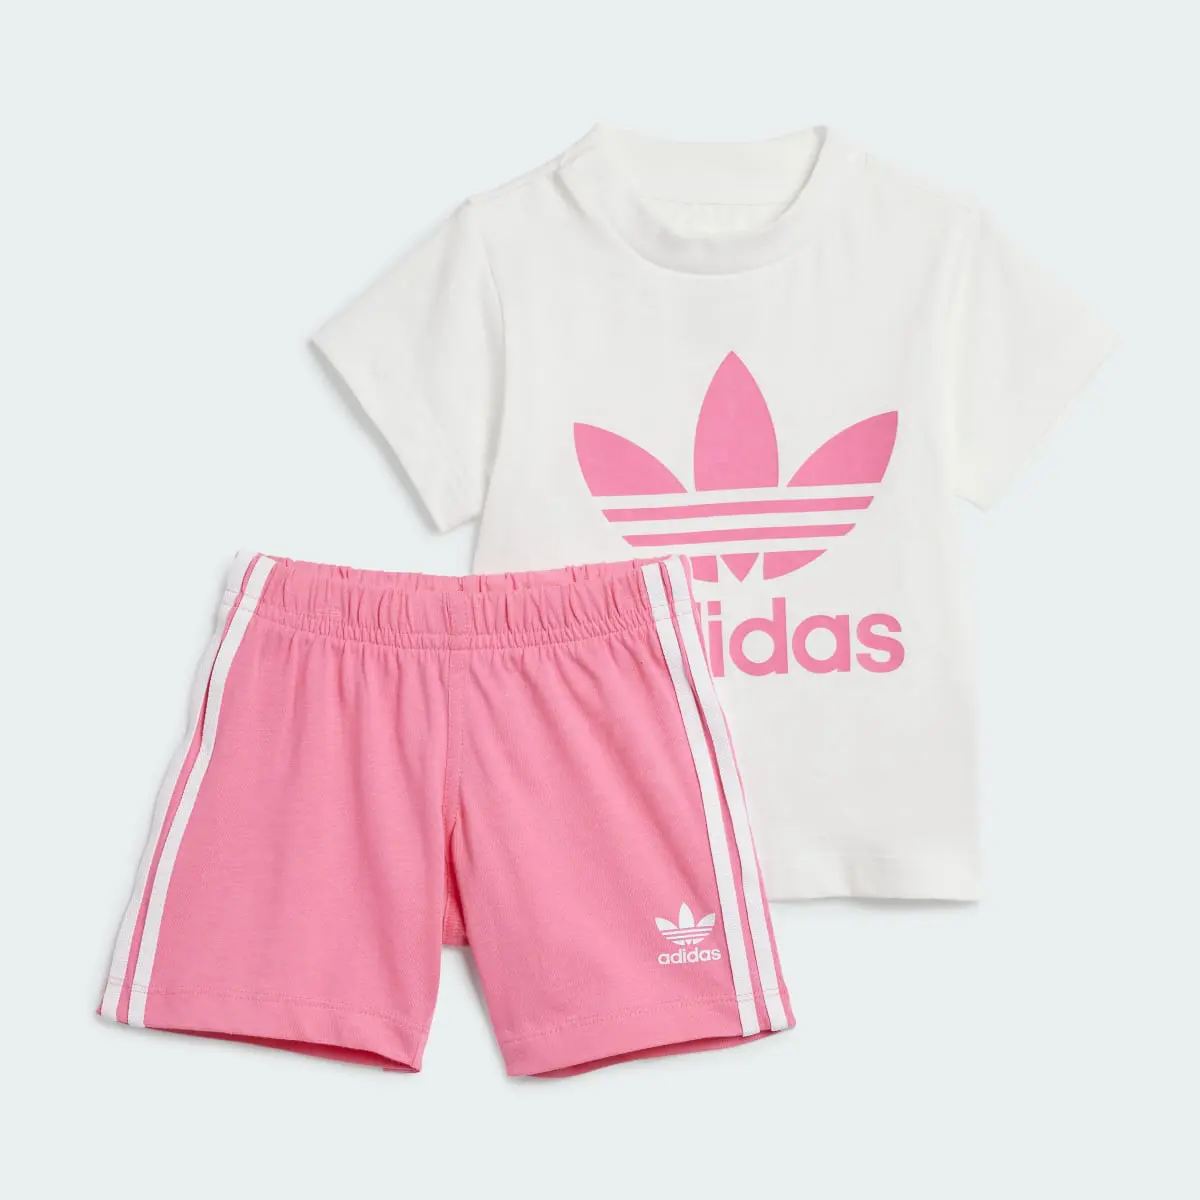 Adidas Trefoil Shorts und T-Shirt Set. 2